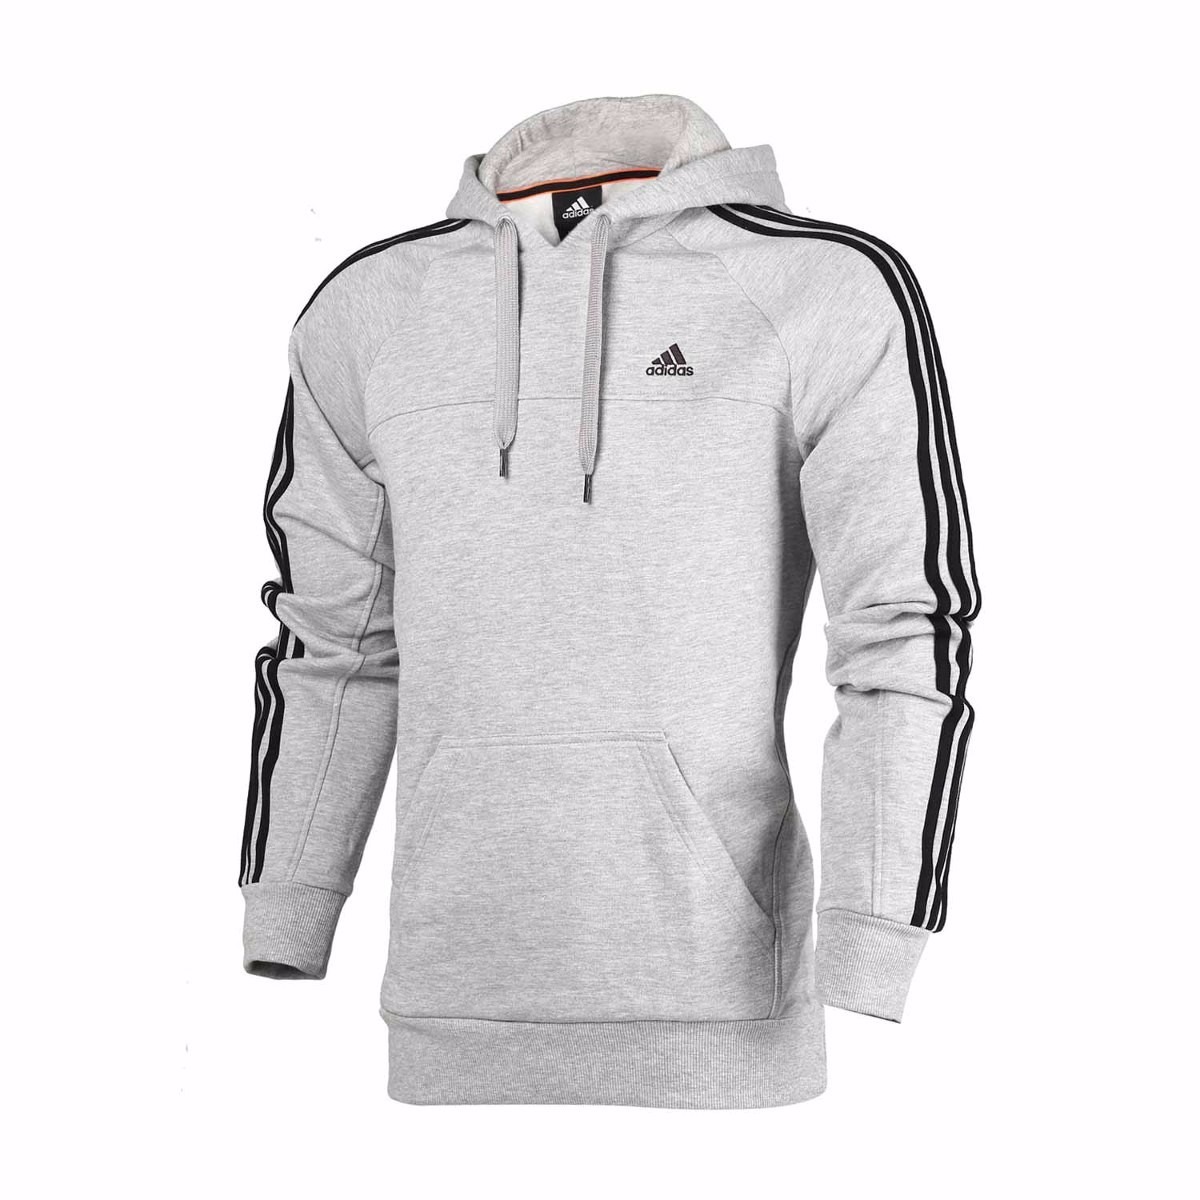 Poleron Adidas Essentials Men S 3 Stripe Grey Talla S Adulto